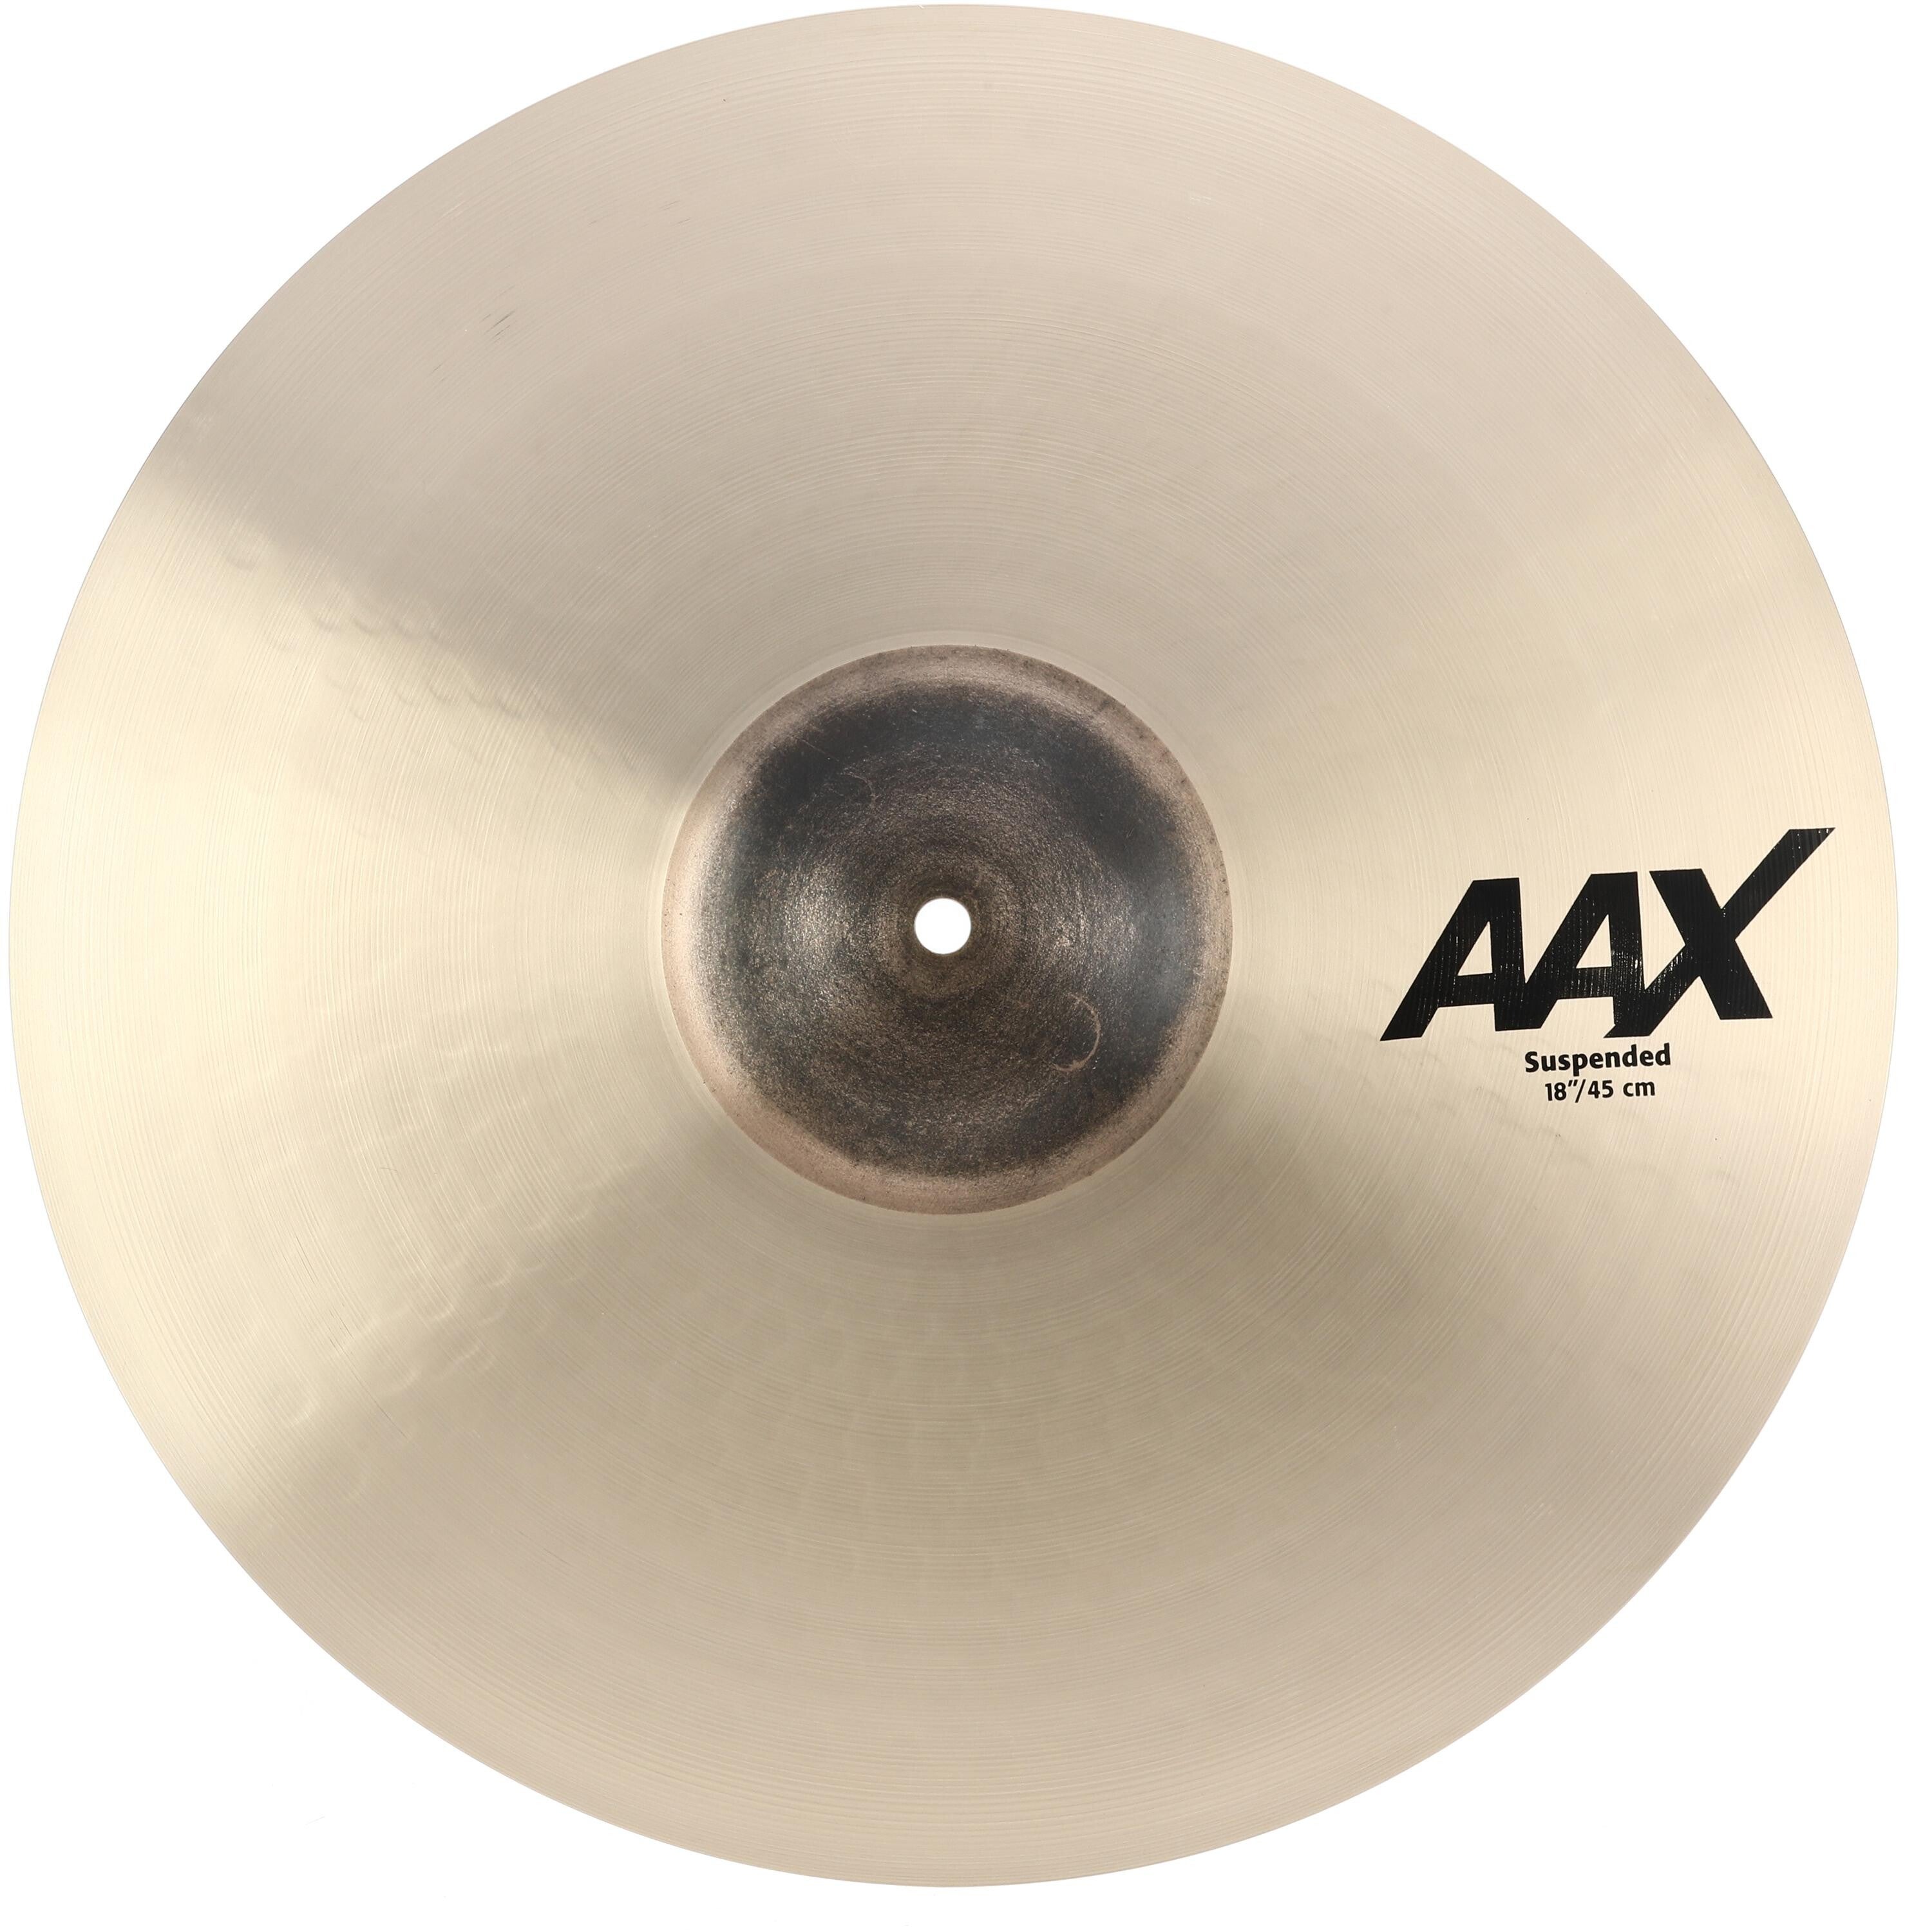 Sabian AAX Suspended Cymbal - 18-inch